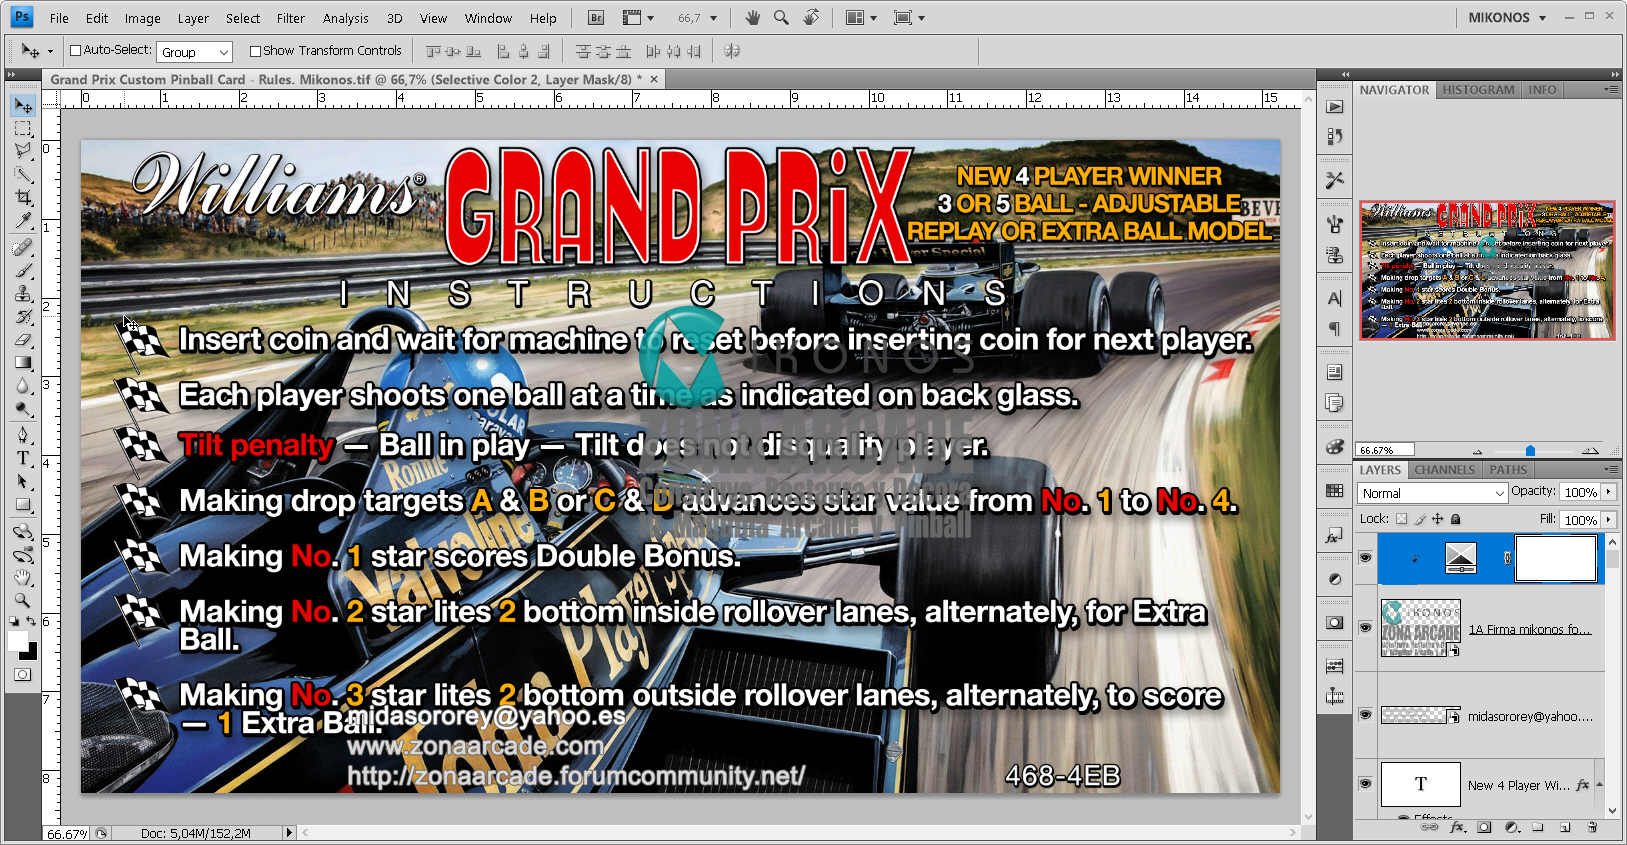 Grand Prix Pinball Card Customized - Rules. Mikonos1